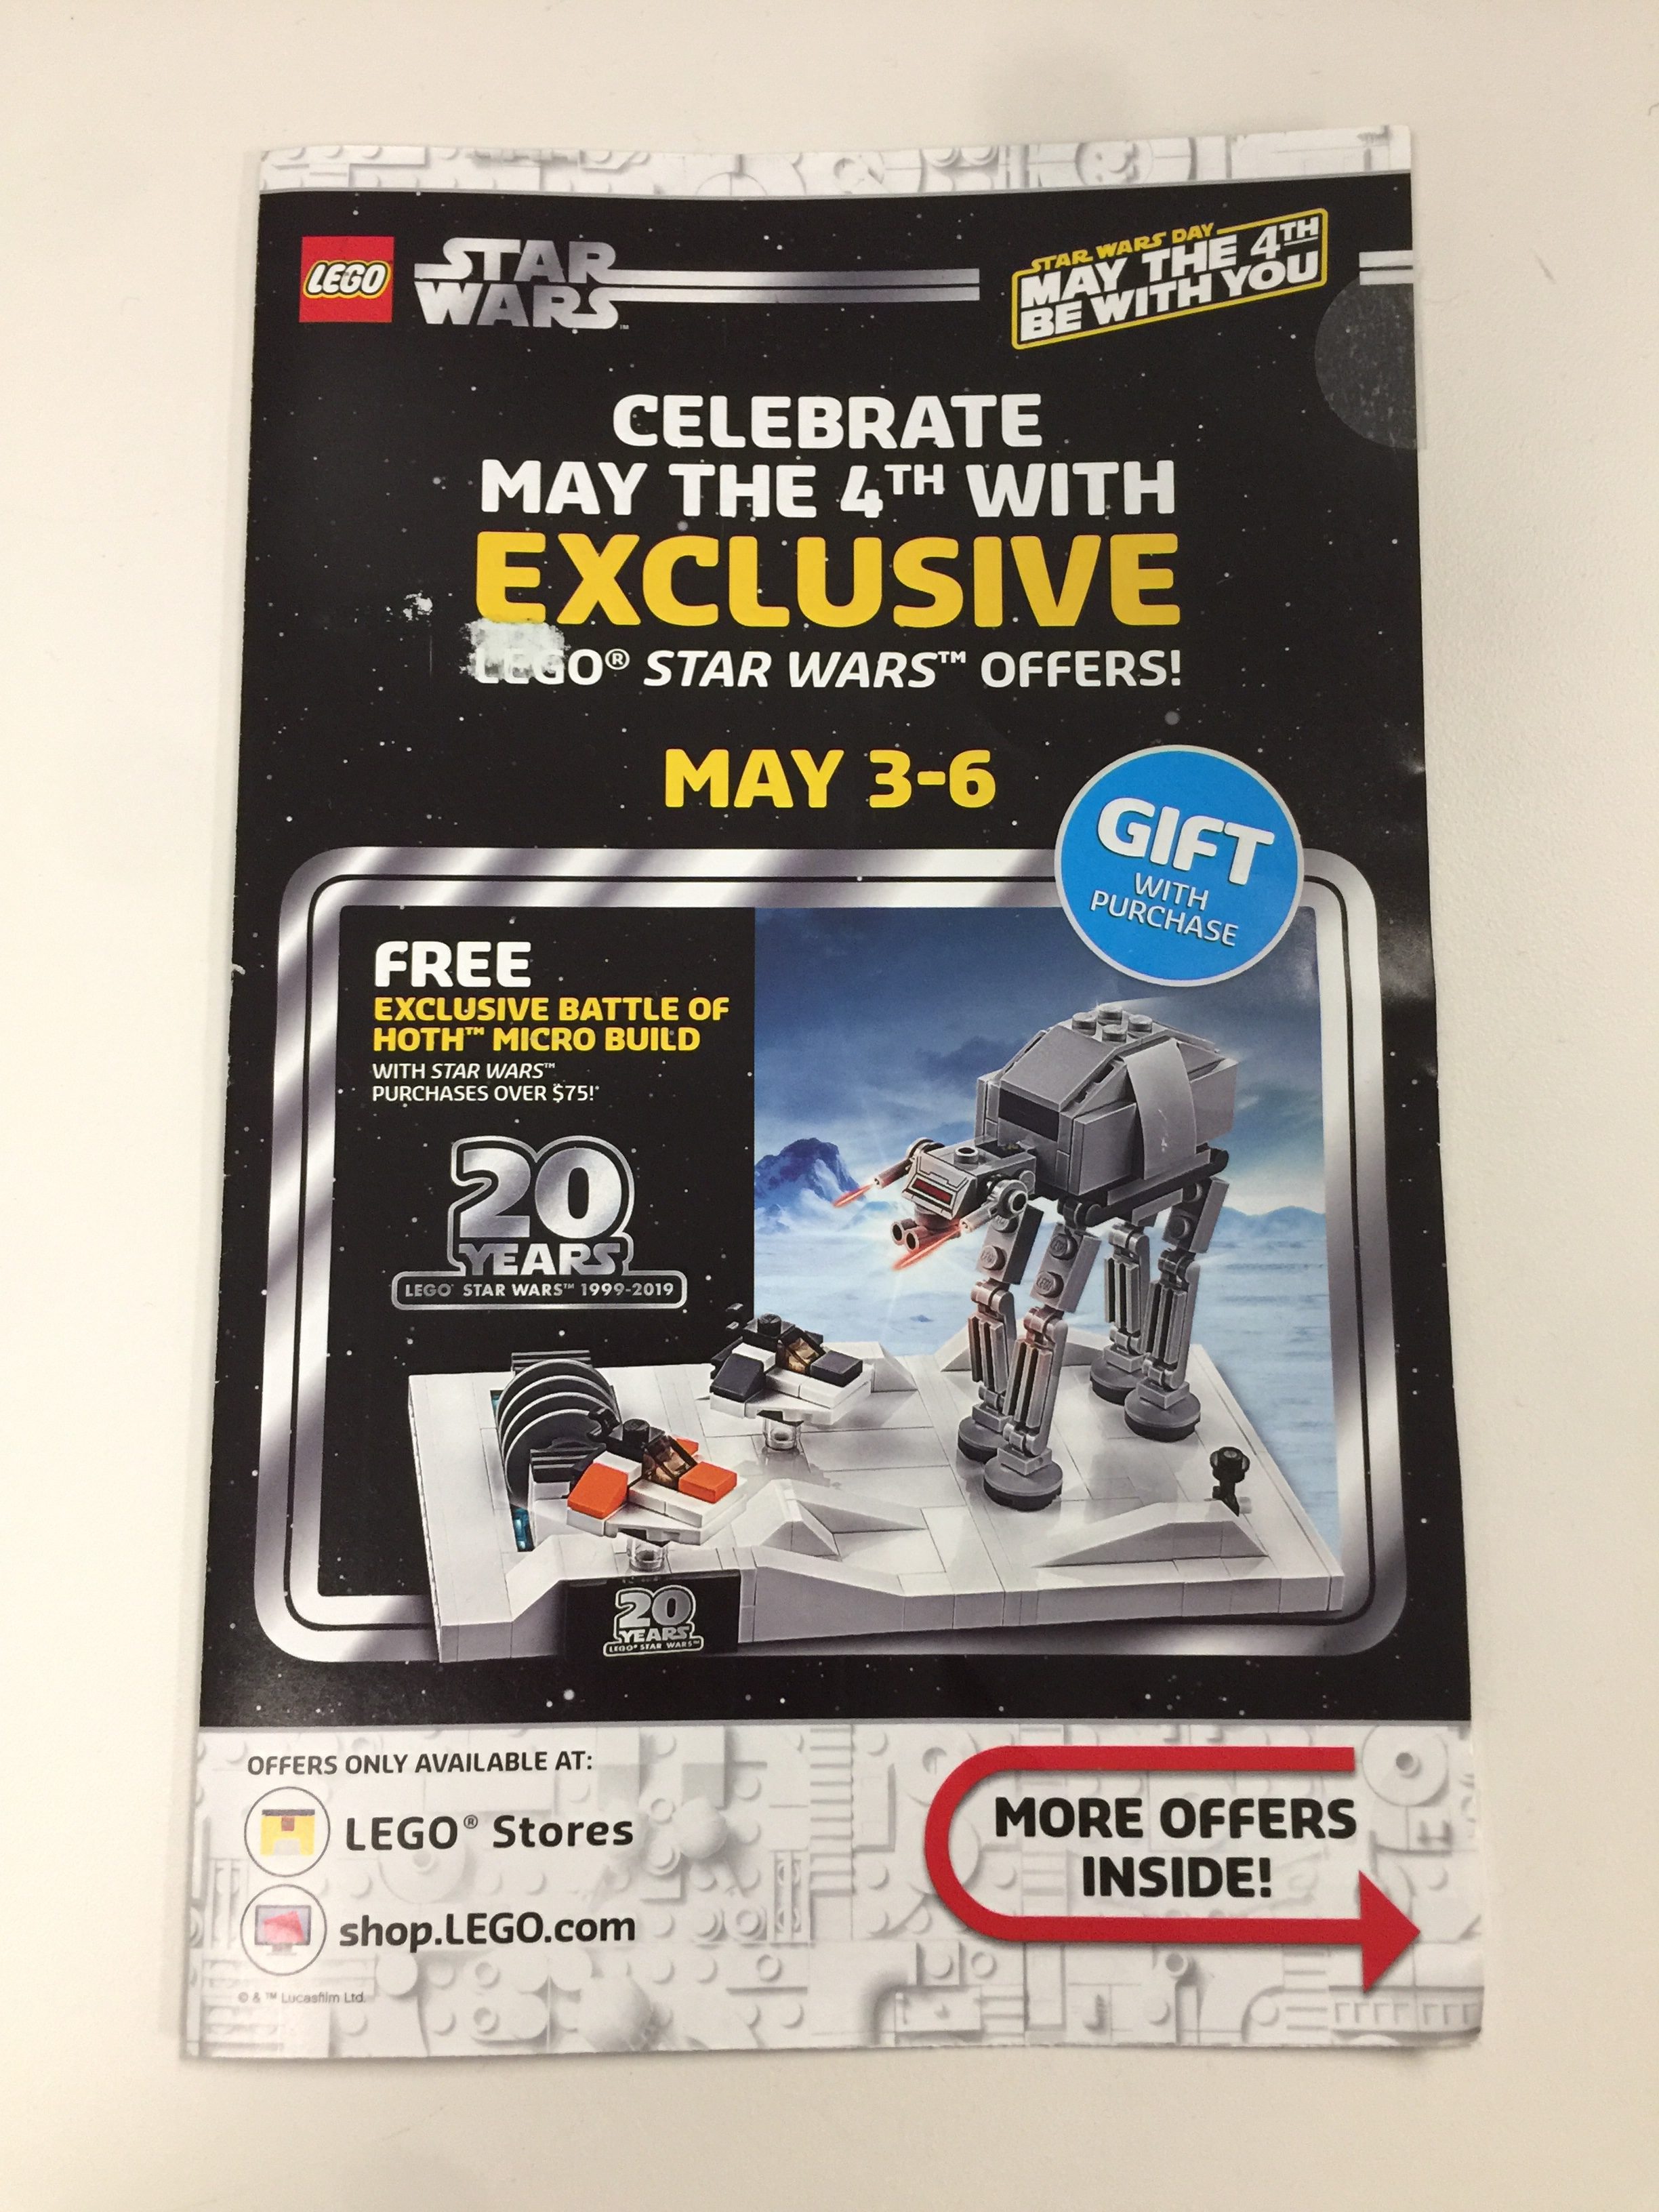 LEGO Shop@Home's May 4th Promo FBTB